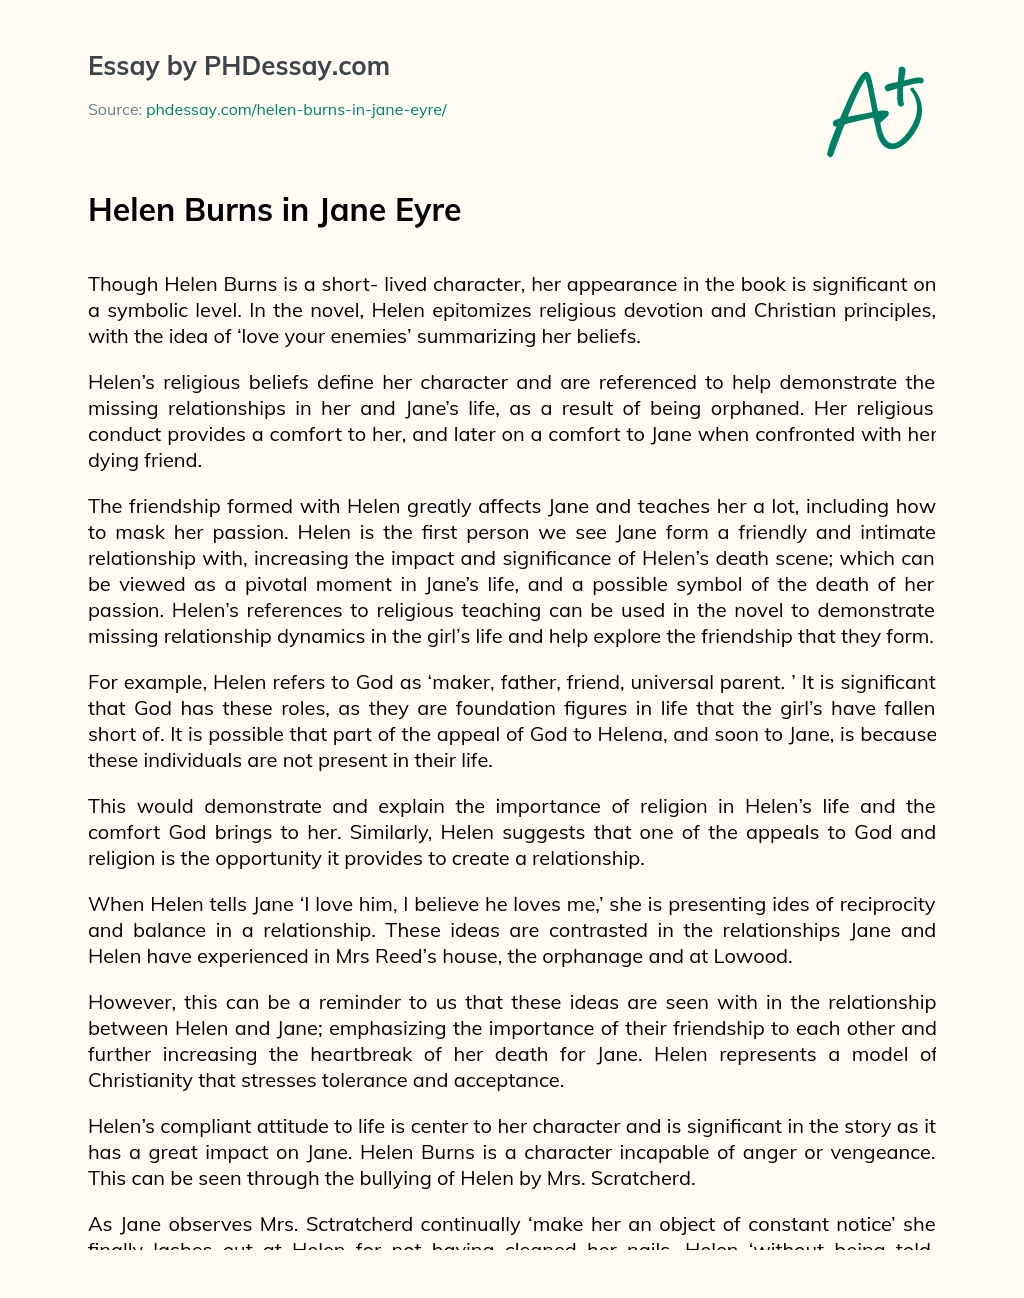 Helen Burns in Jane Eyre essay